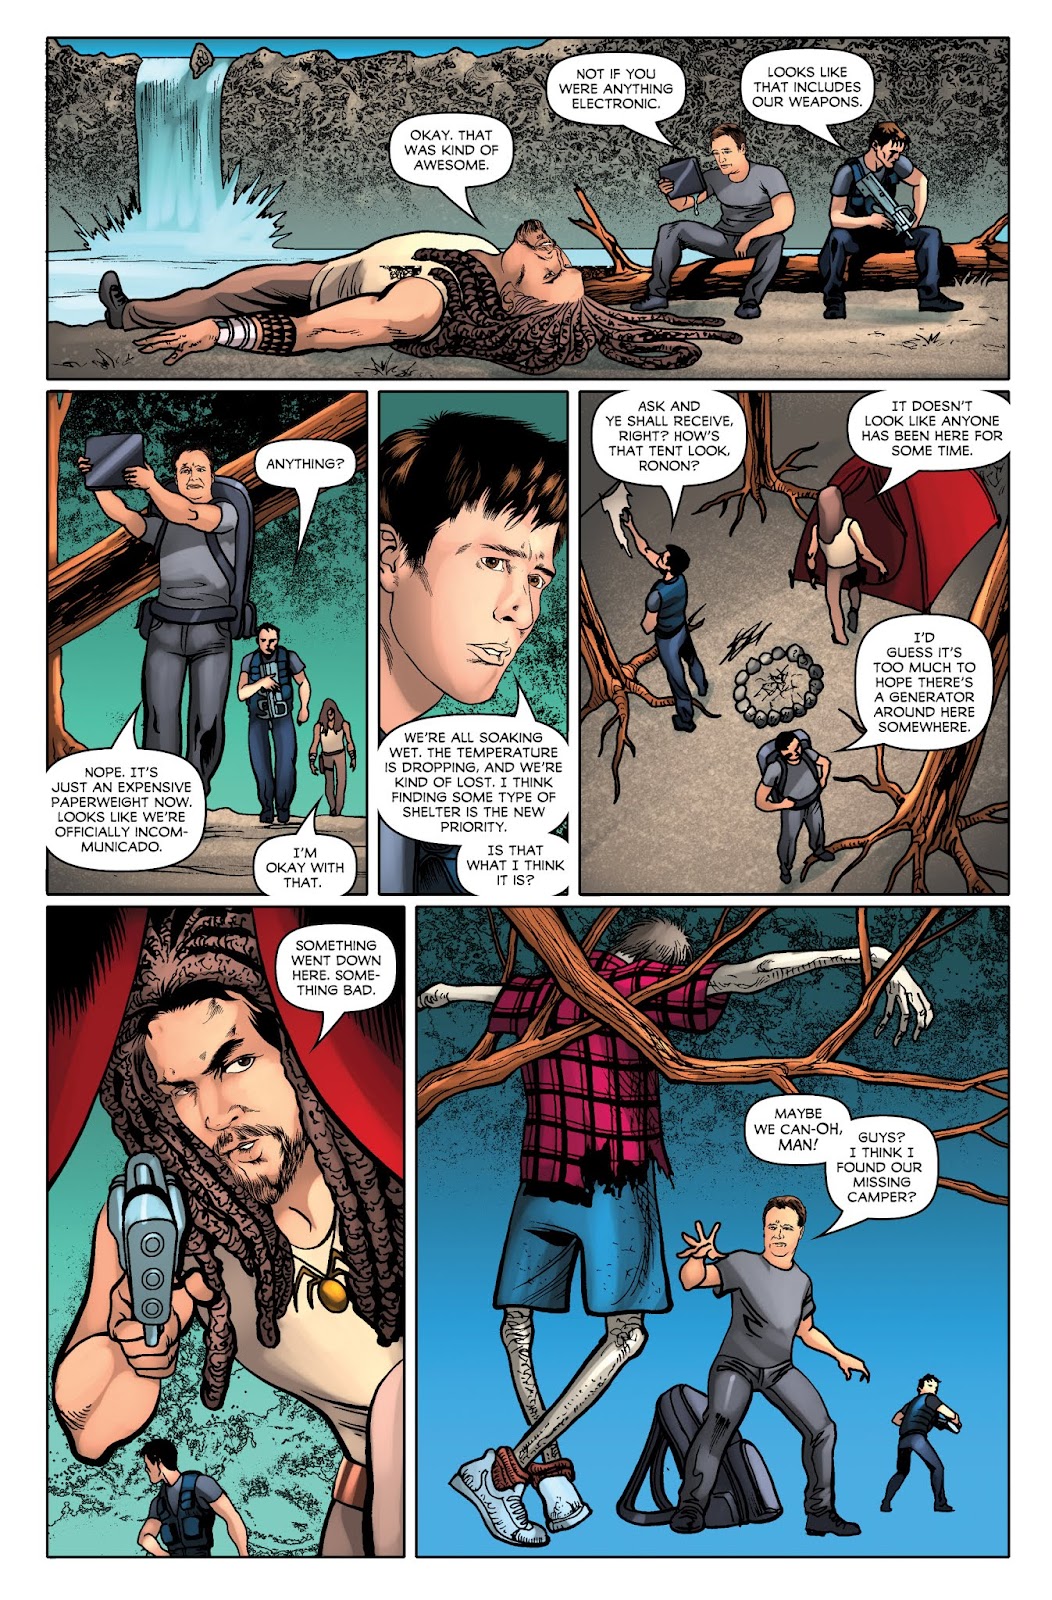 Stargate Atlantis/Stargate issue 2 - Page 19